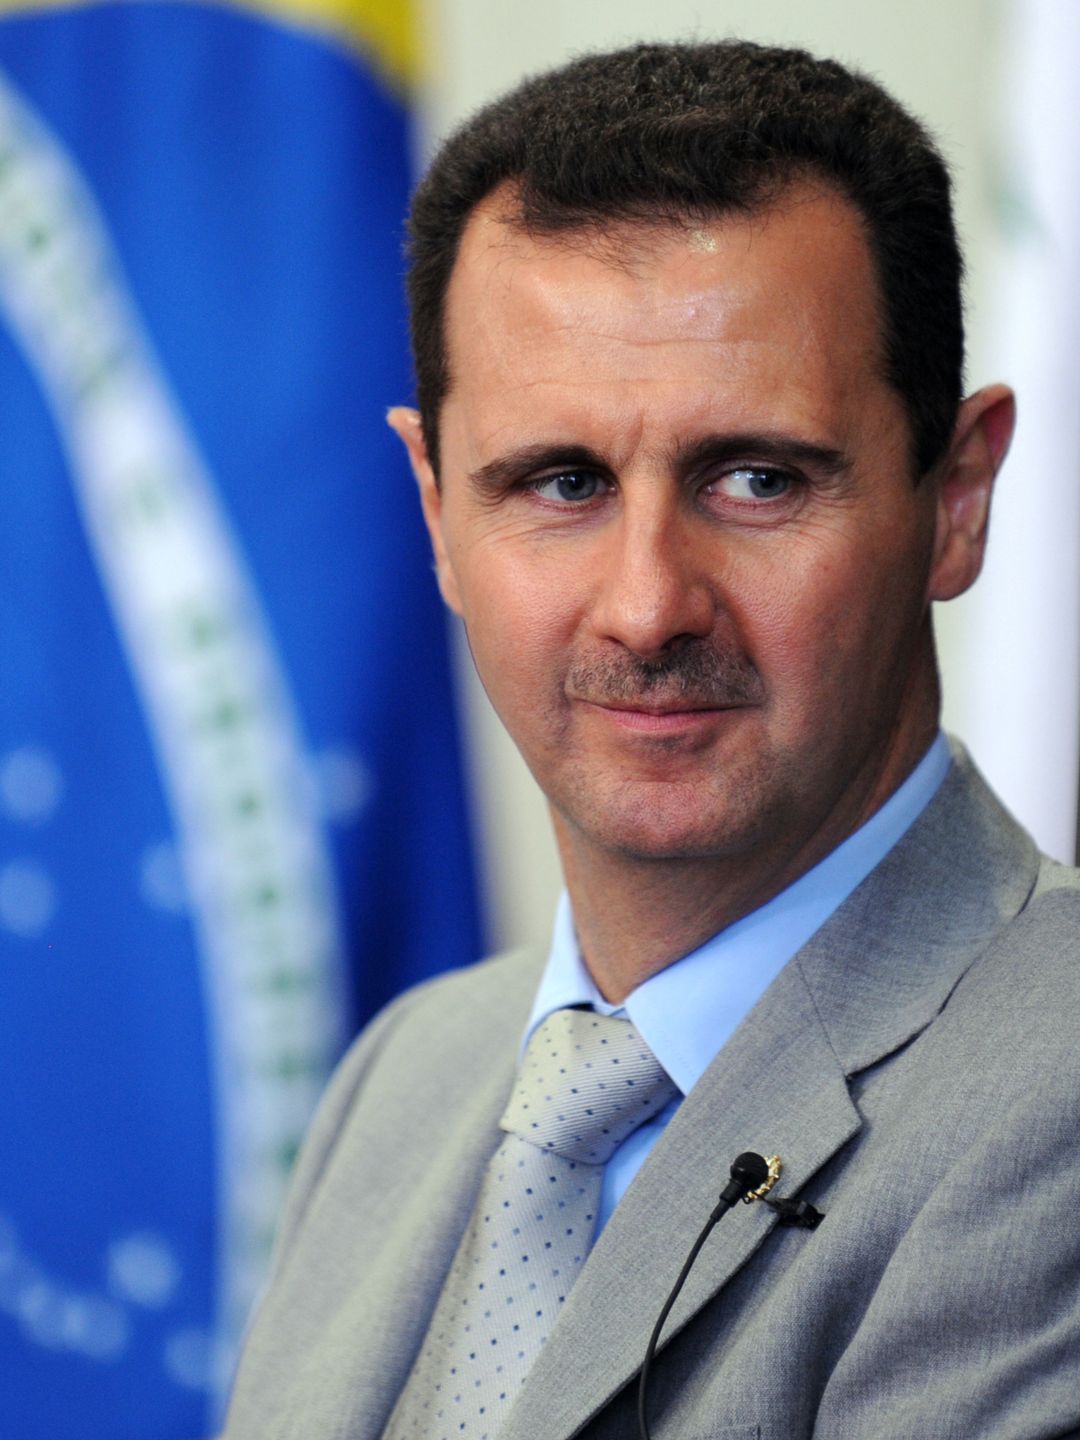 Bashar Assad early childhood